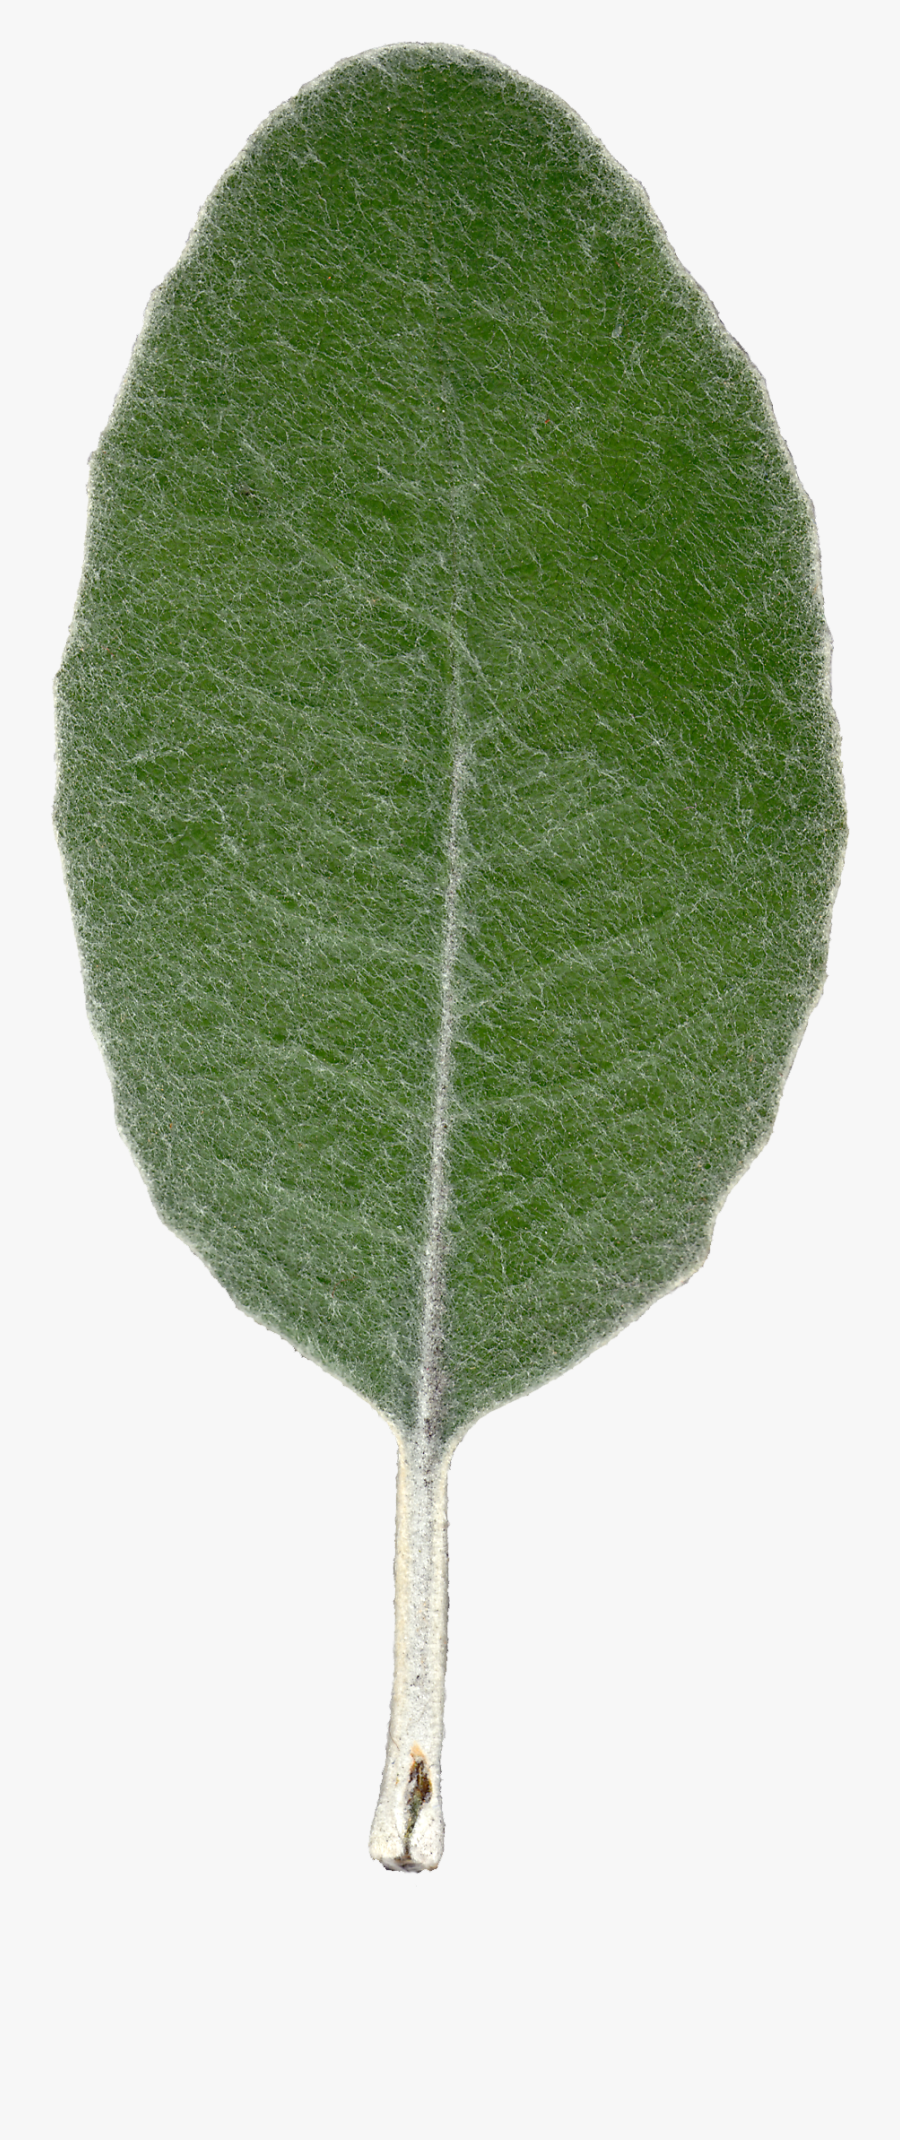 Plant Leaf Texture Front View By Hhh316 - Leaf Texture, Transparent Clipart